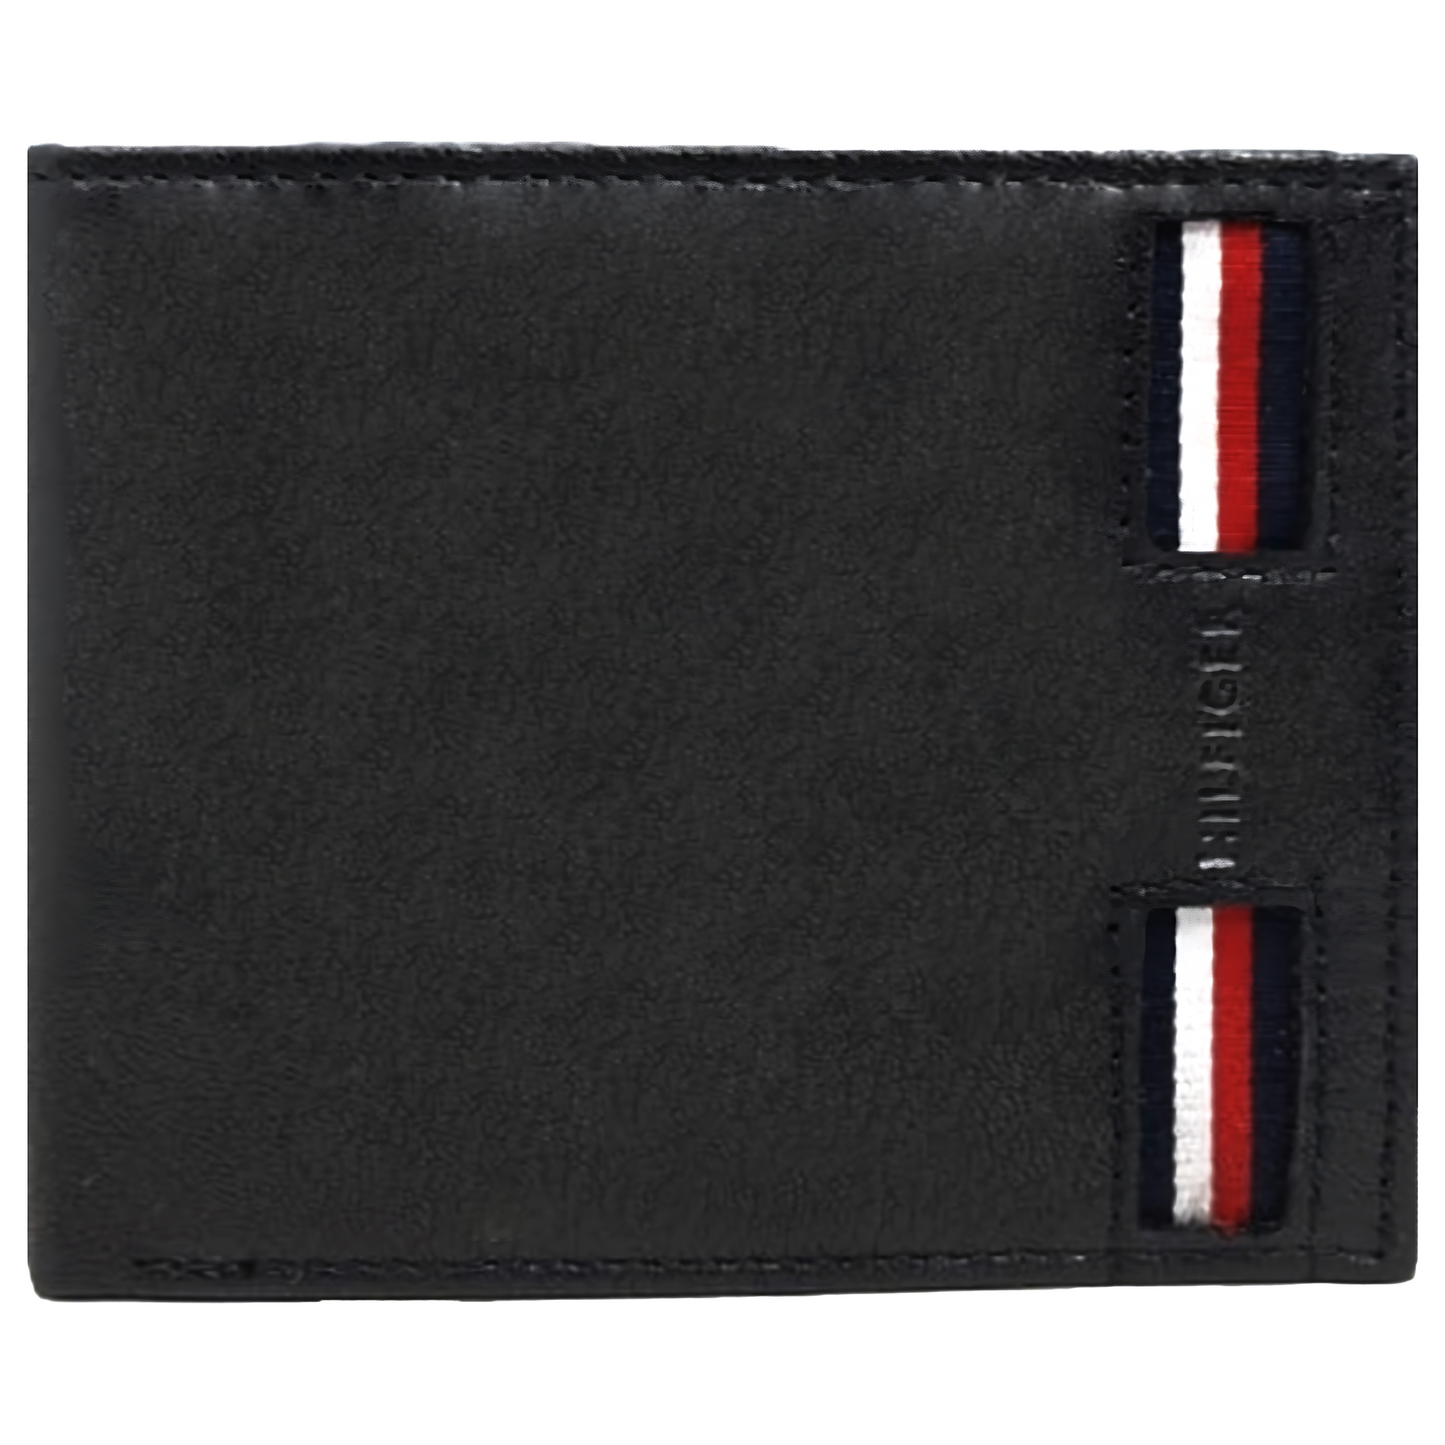 Billetera Tommy Hilfiger leather wallet / negro